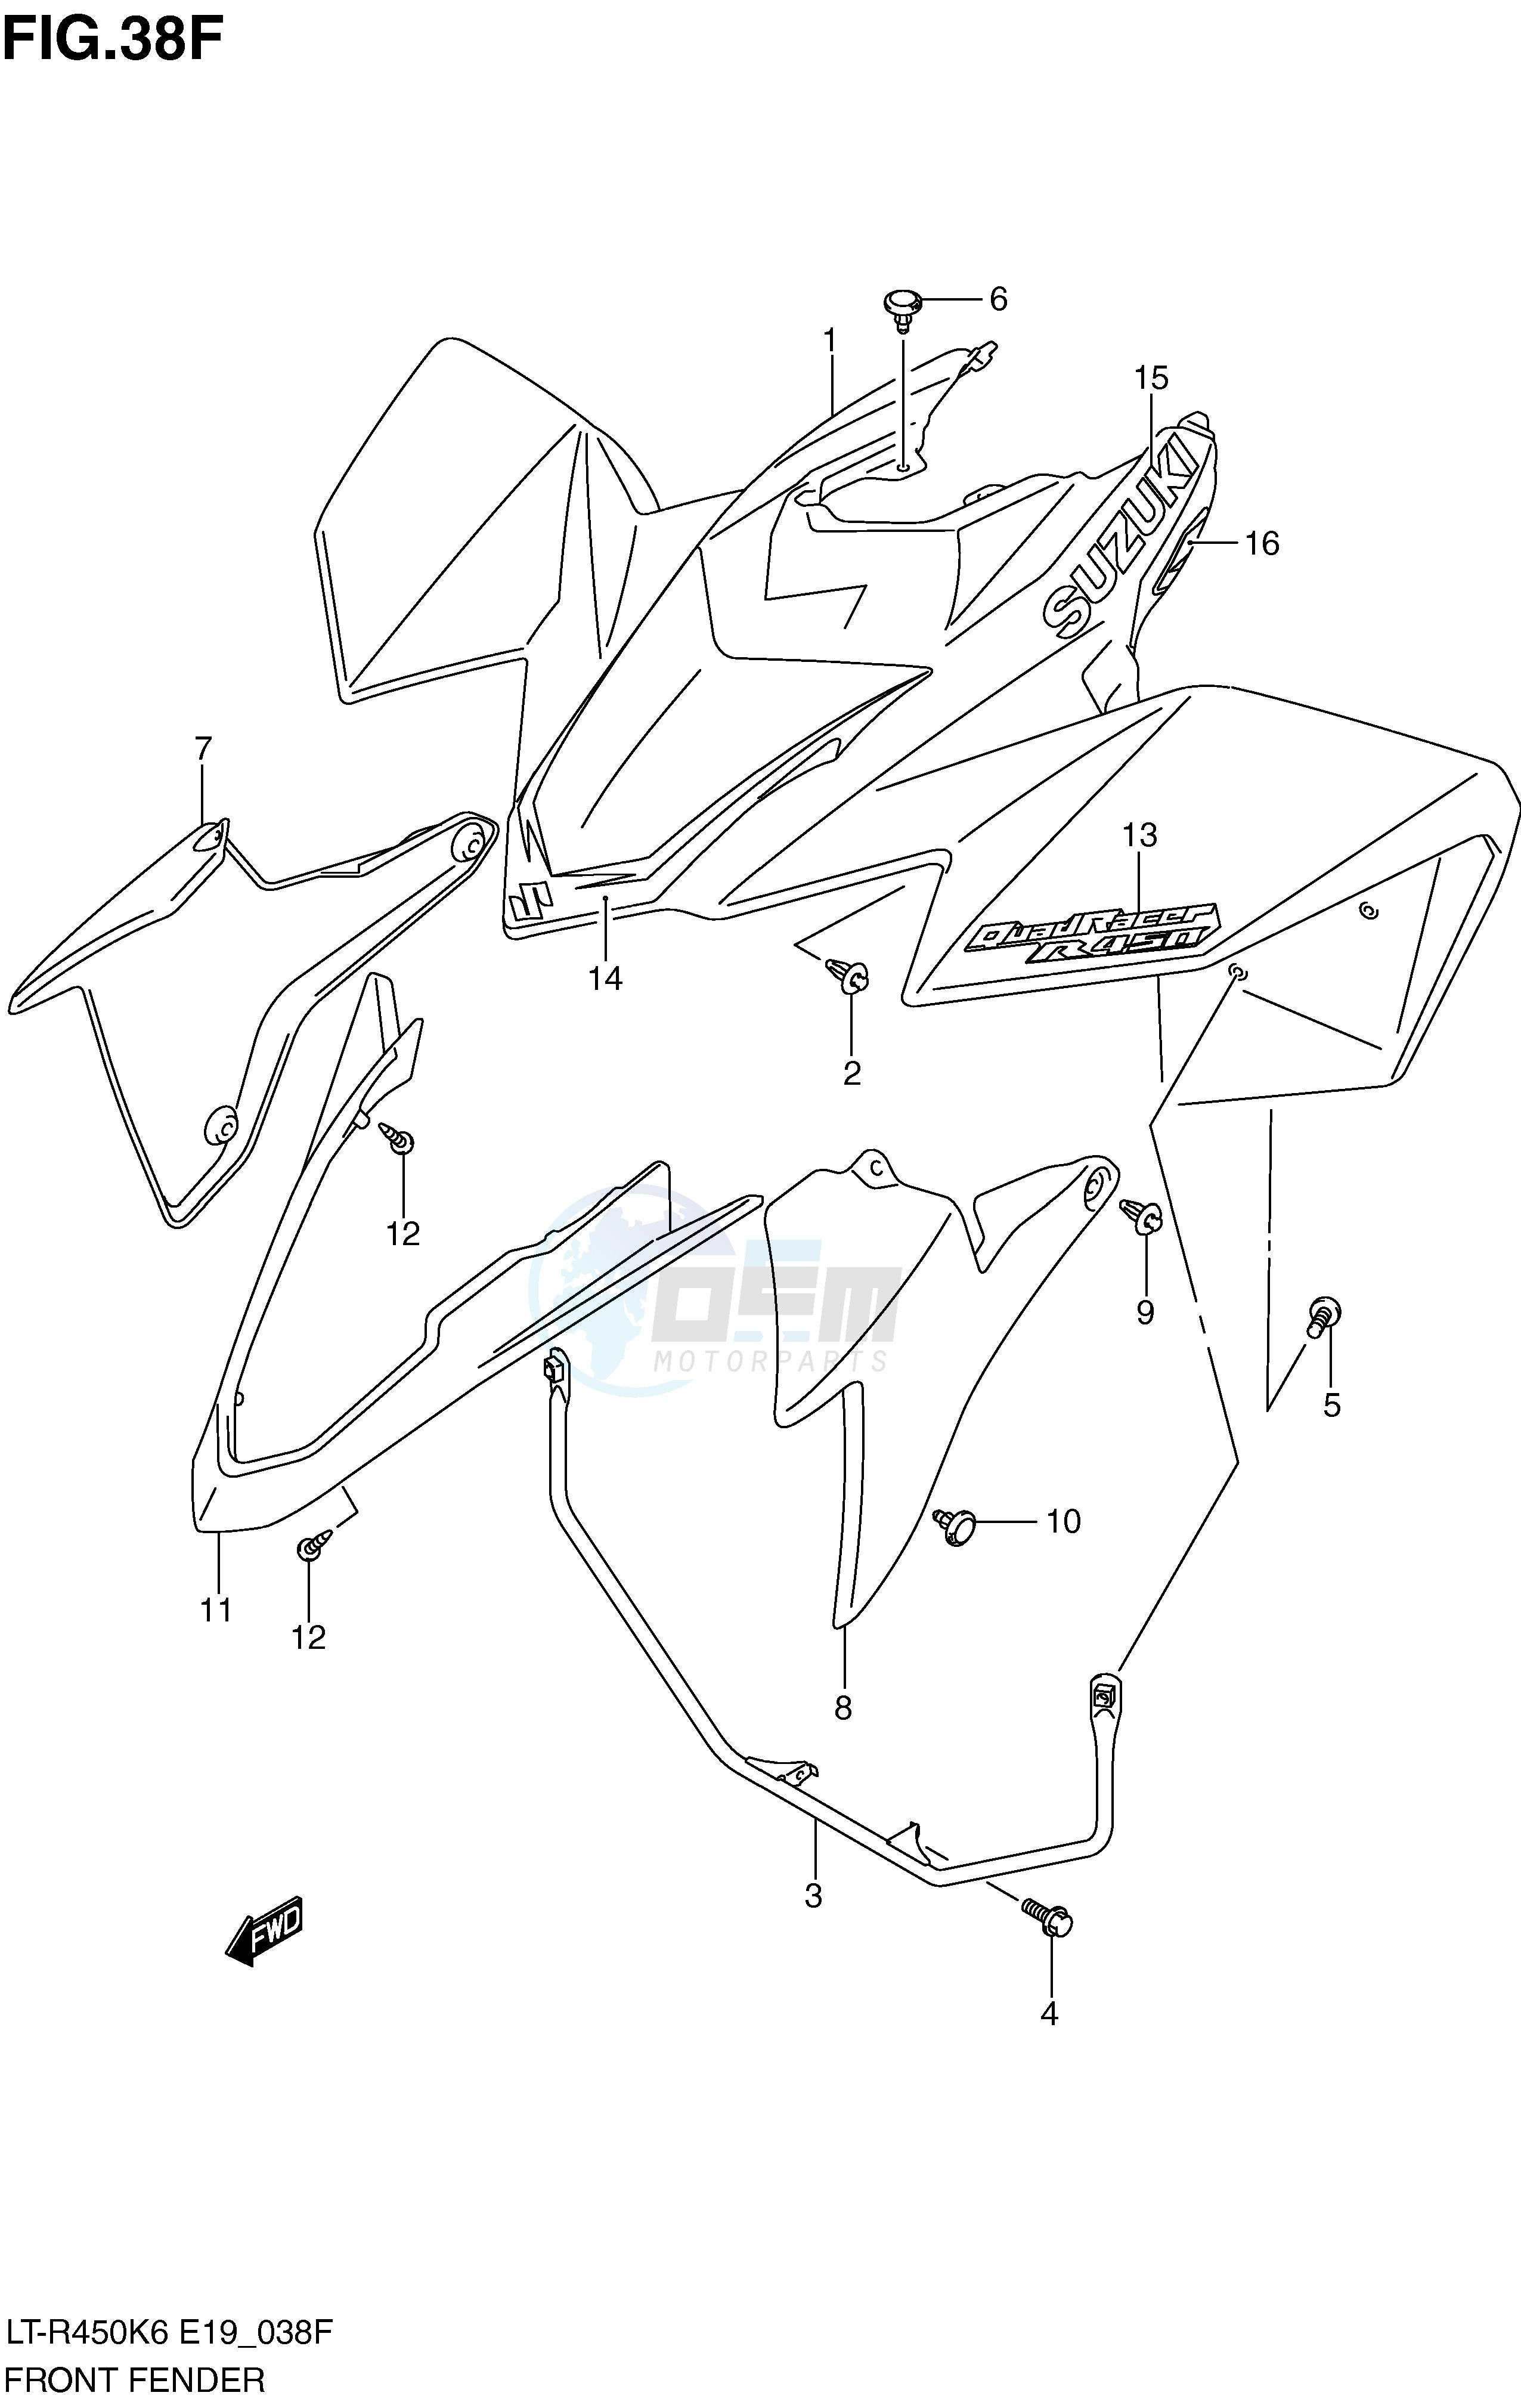 FRONT FENDER (LT-R450L0) blueprint